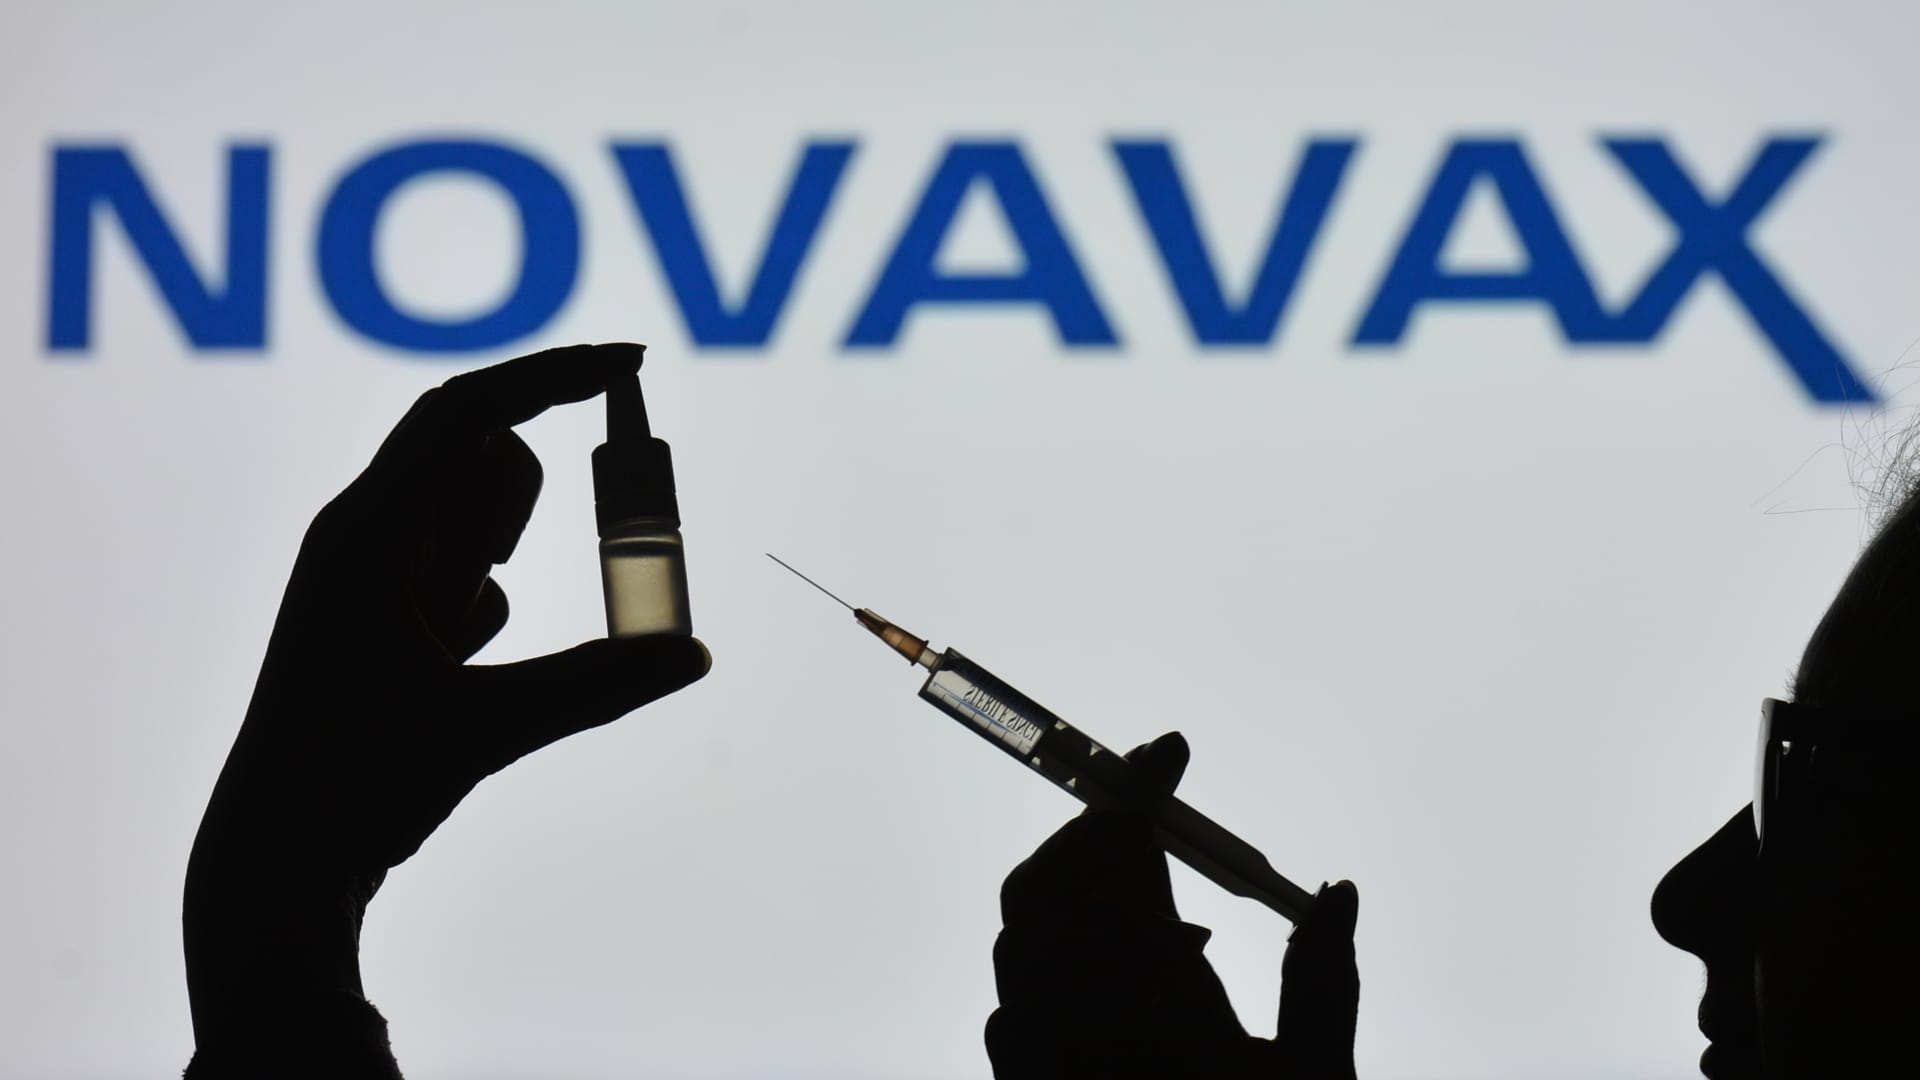 Novavax stock jumps on Sanofi Covid vaccine deal